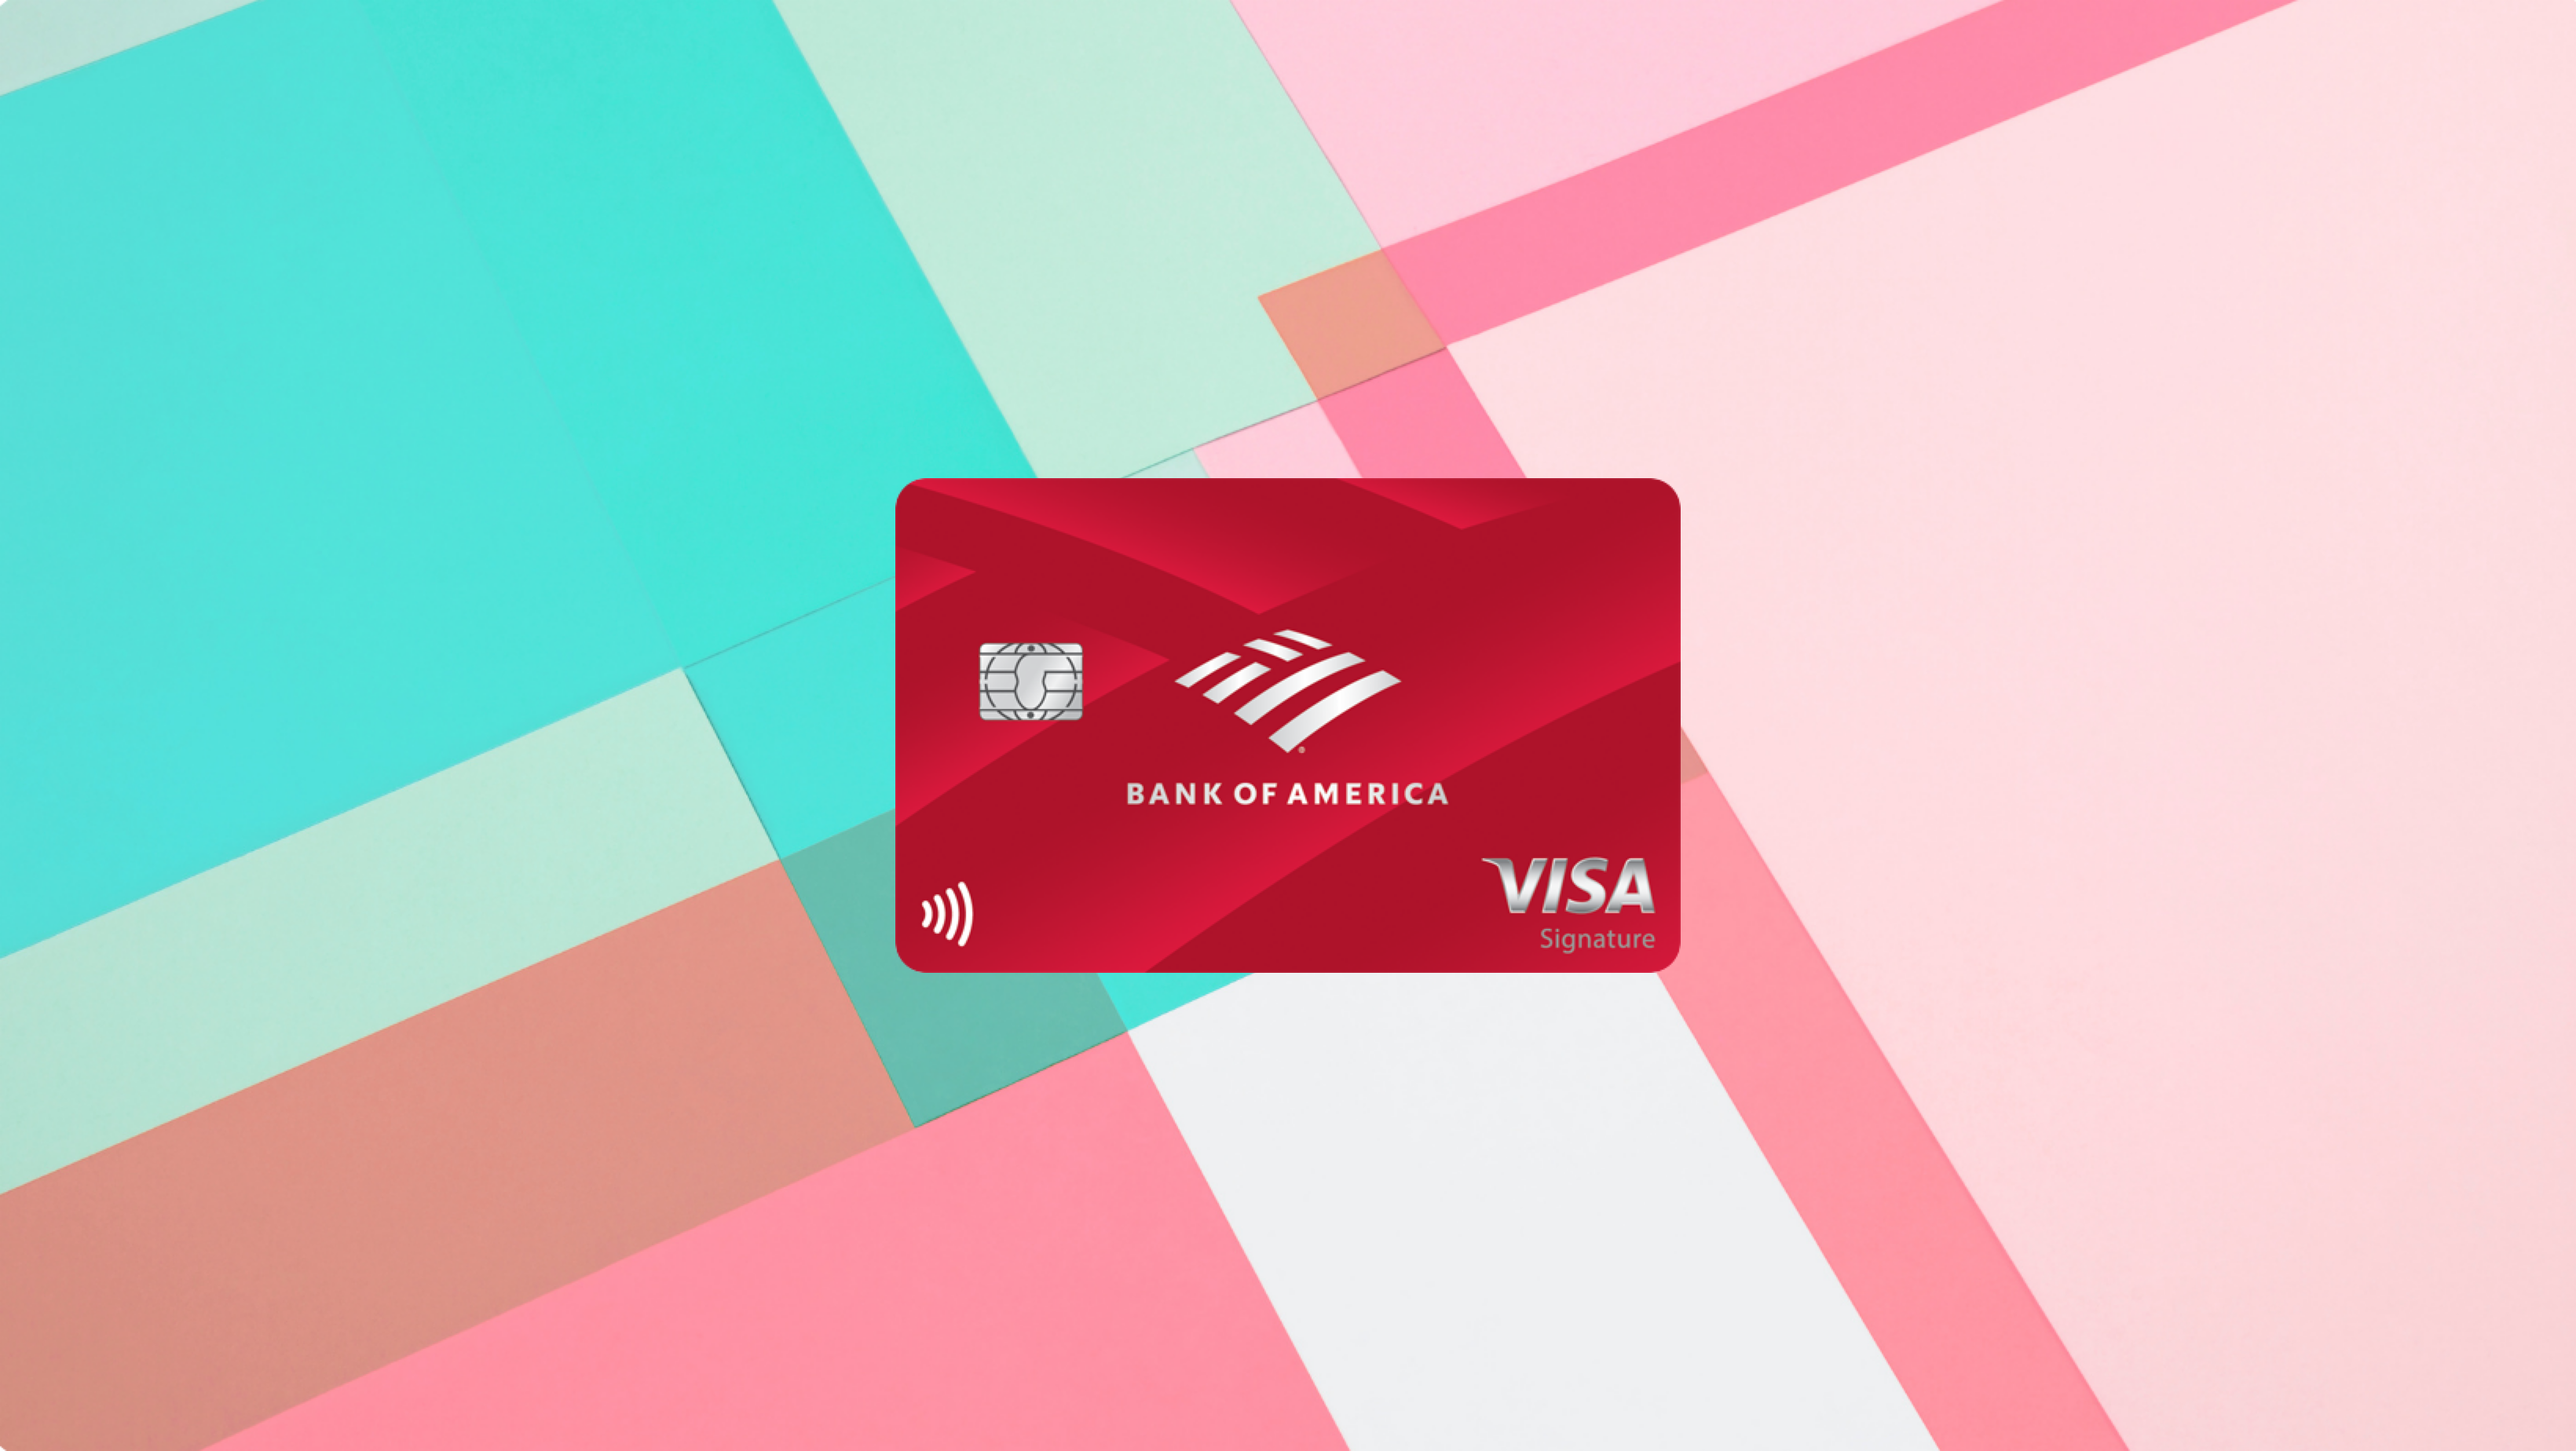 Bank of America® Customized Cash Rewards credit card